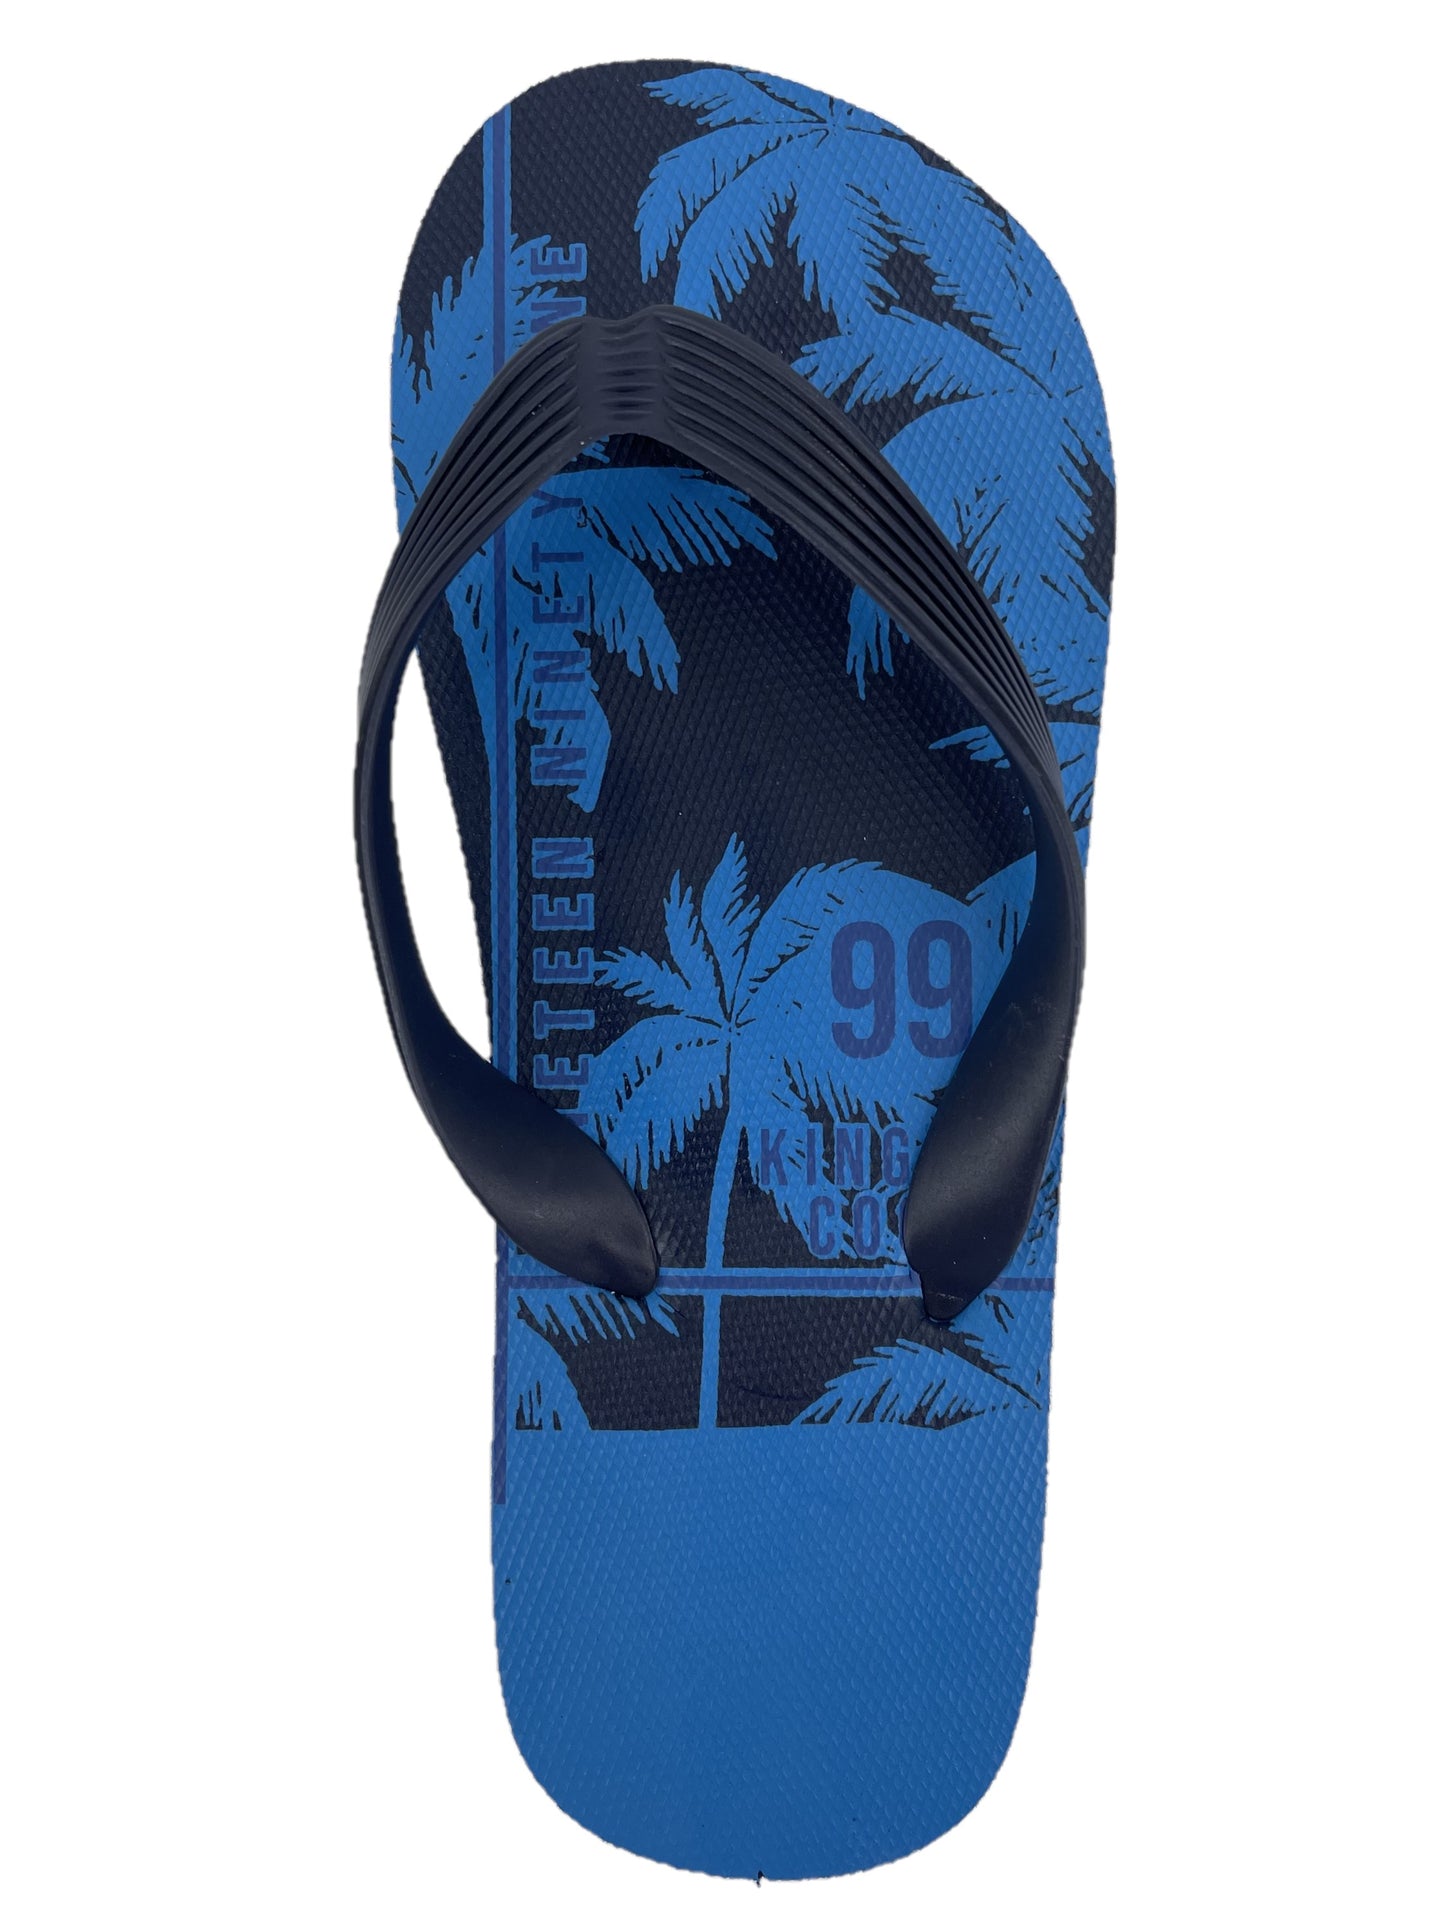 Boys Palm Tree Print Flip Flips Toe Post Beach Sandals